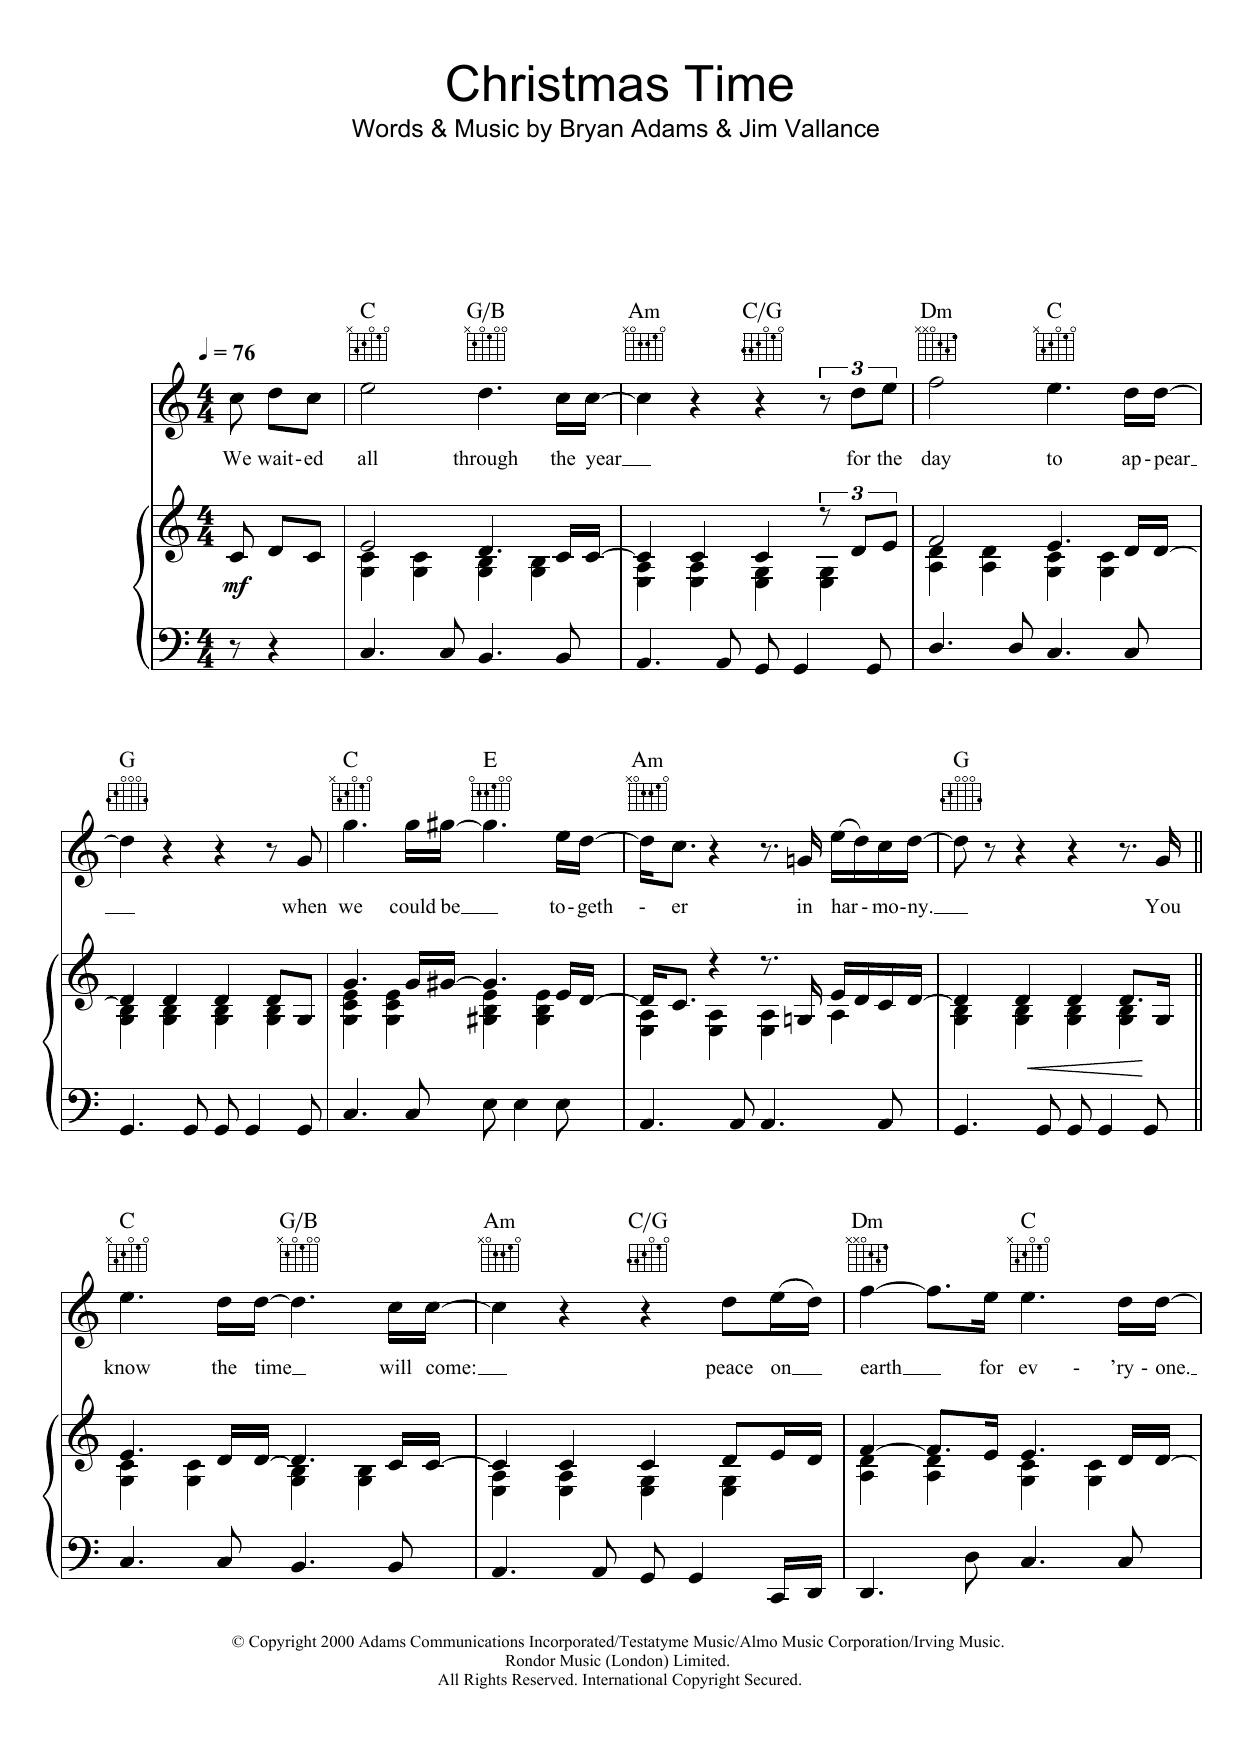 Bryan Adams Christmas Time Sheet Music Notes & Chords for Lead Sheet / Fake Book - Download or Print PDF